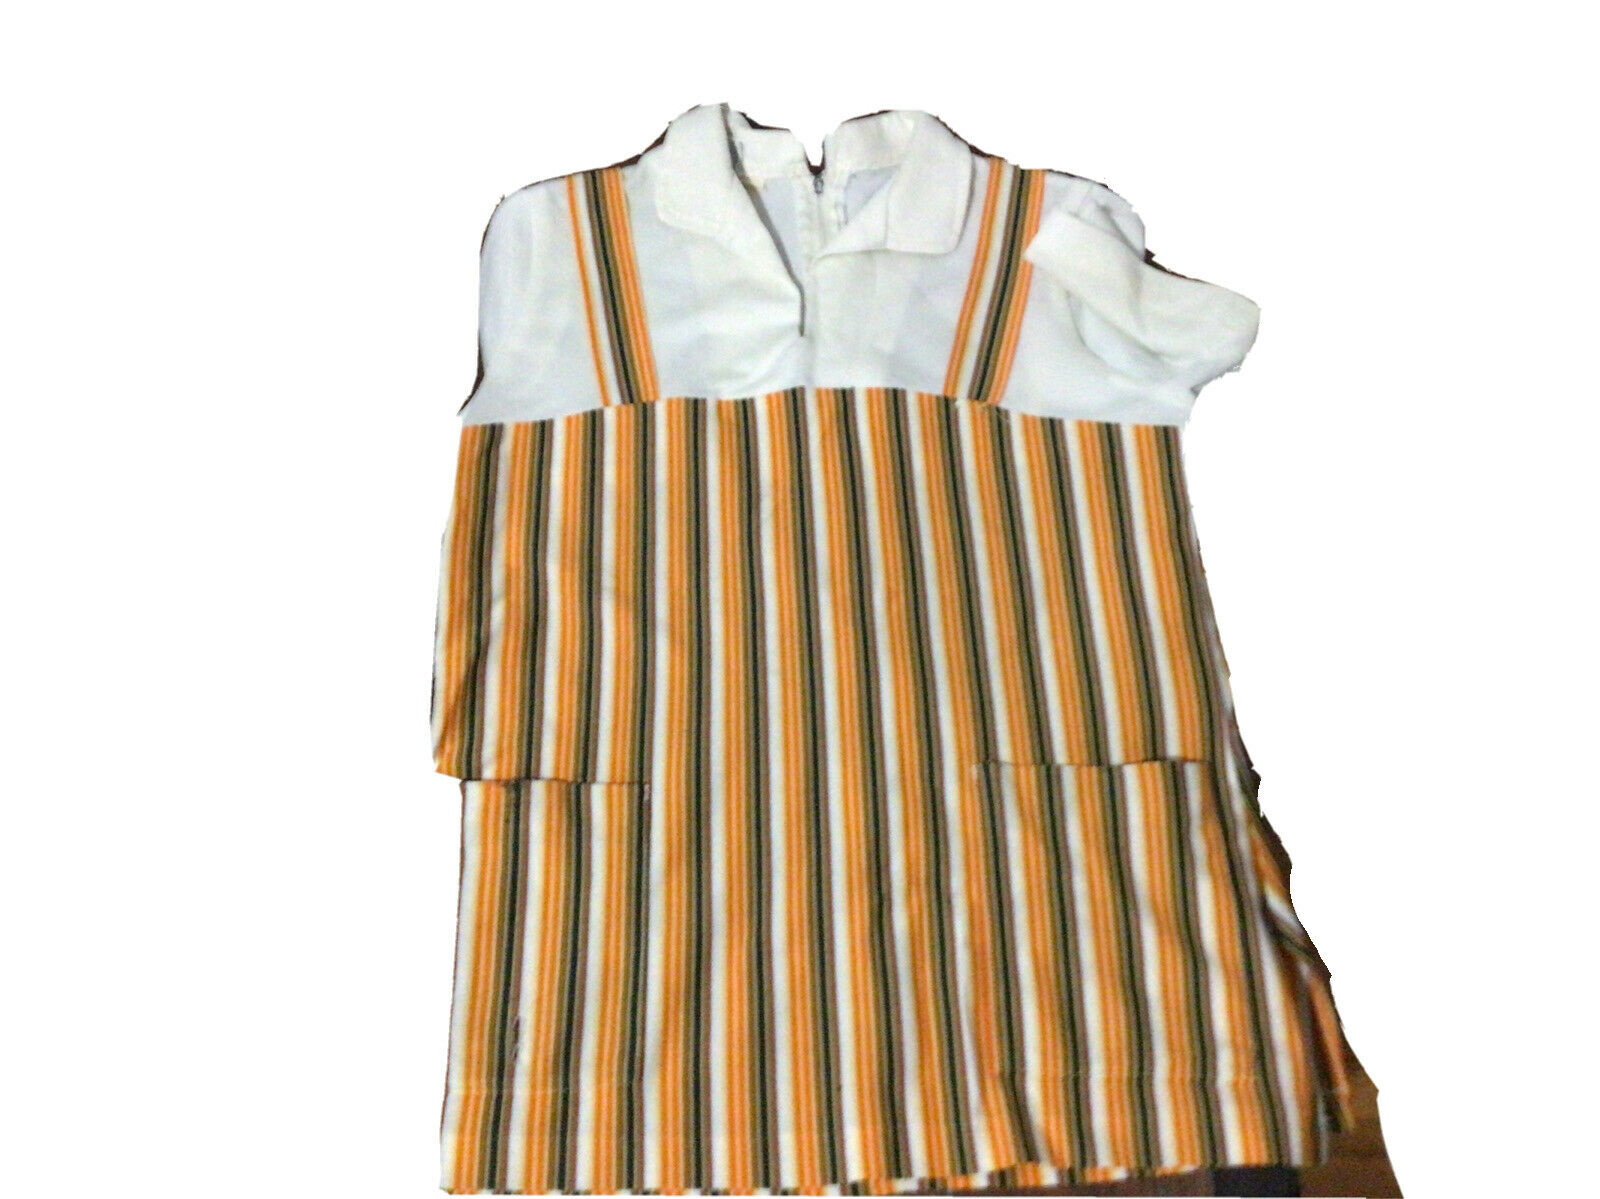 Original Very First Waffle House Uniform Shirt